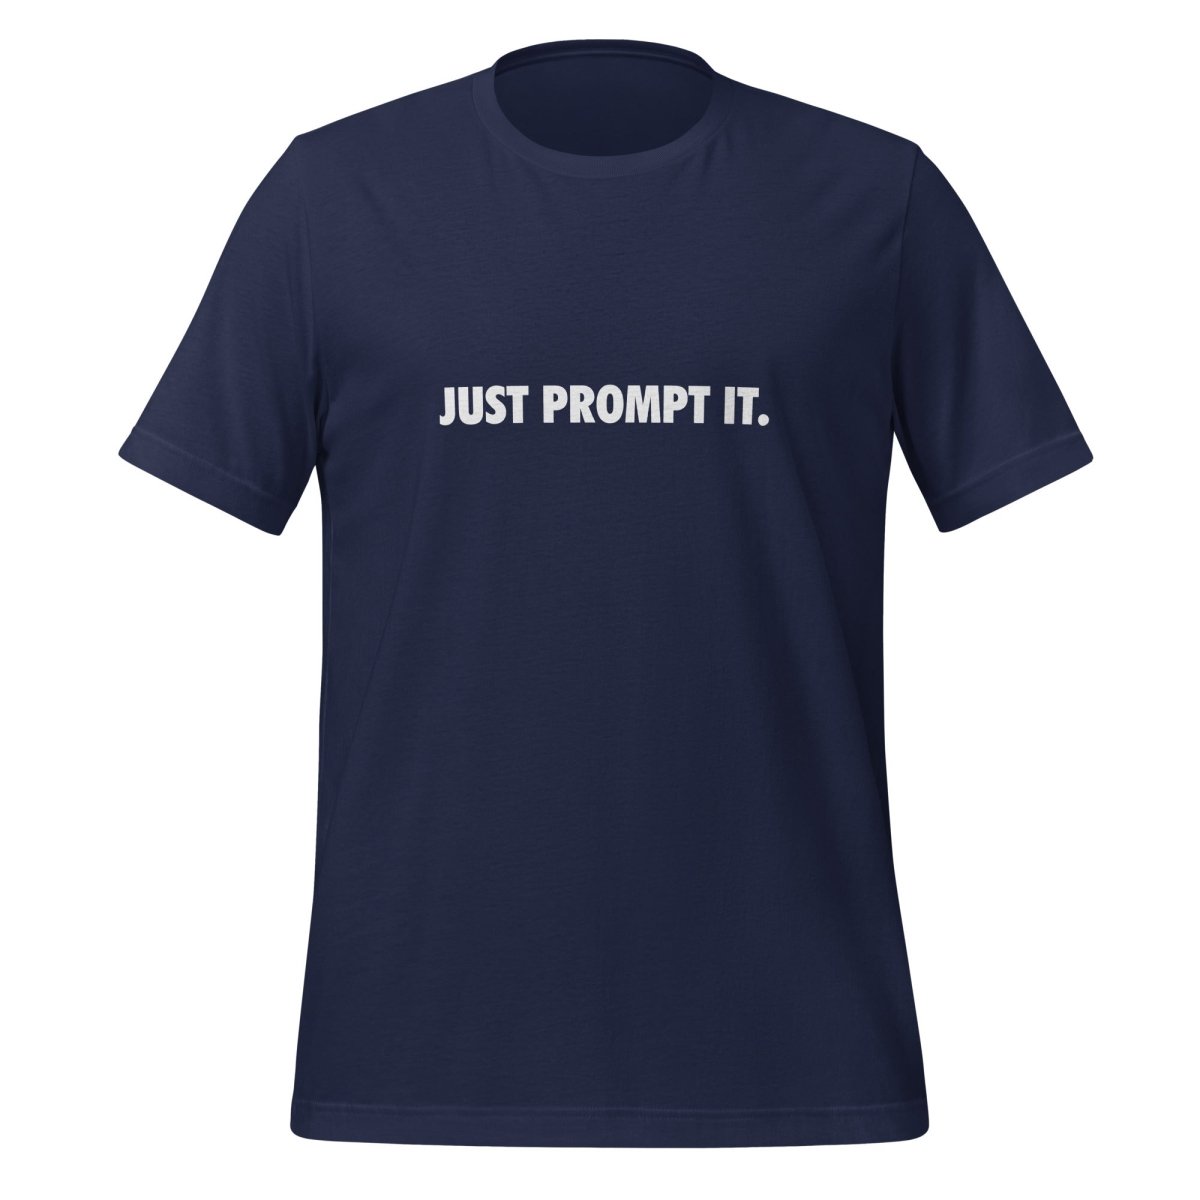 JUST PROMPT IT. T - Shirt (unisex) - Navy - AI Store